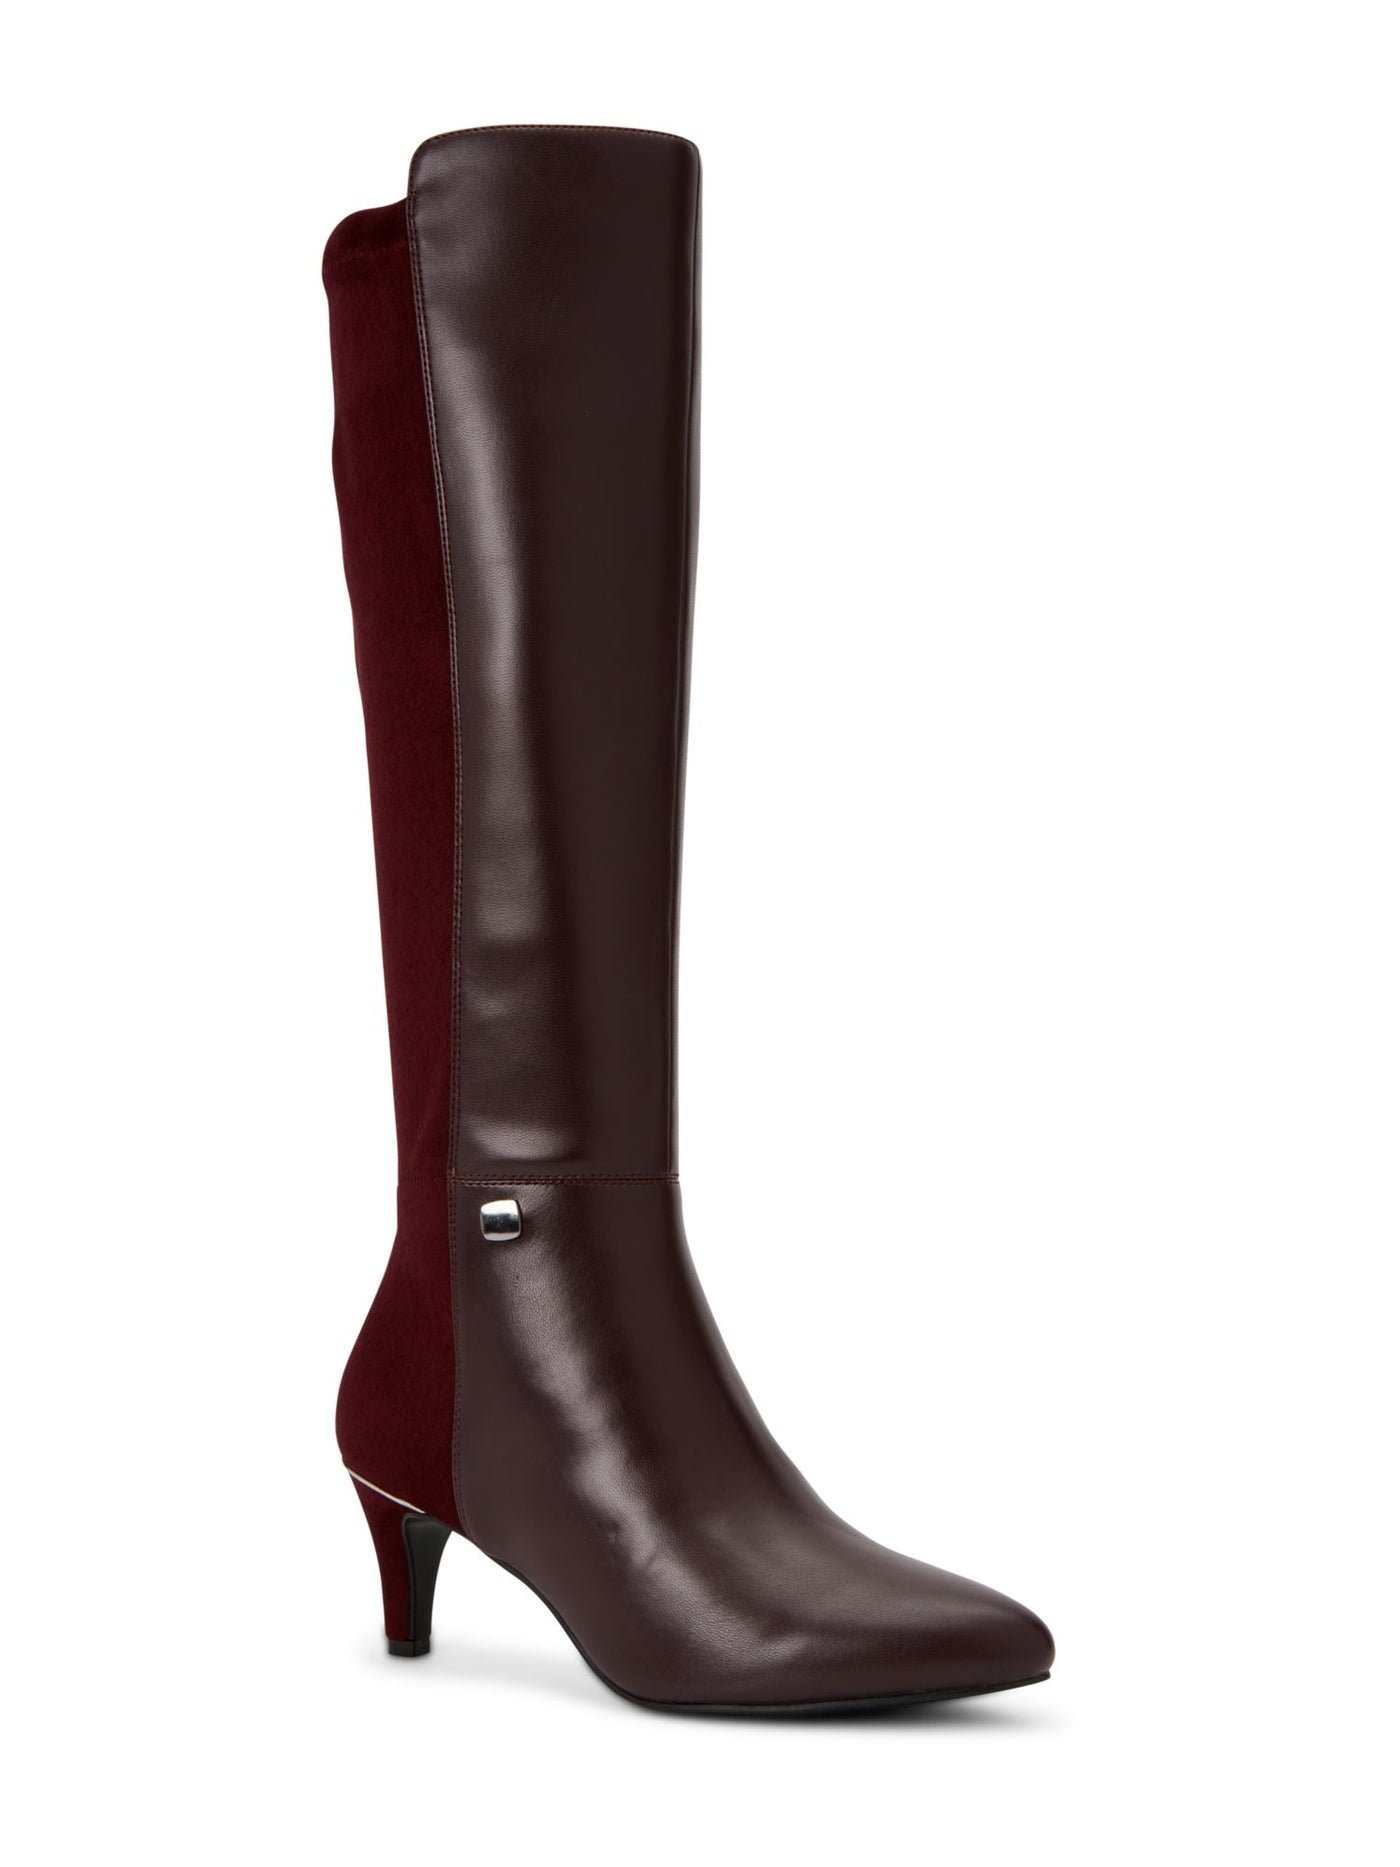 ALFANI Womens Burgundy Arch Support Cushioned Hakuu Almond Toe Kitten Heel Zip-Up Boots Shoes 8.5 M